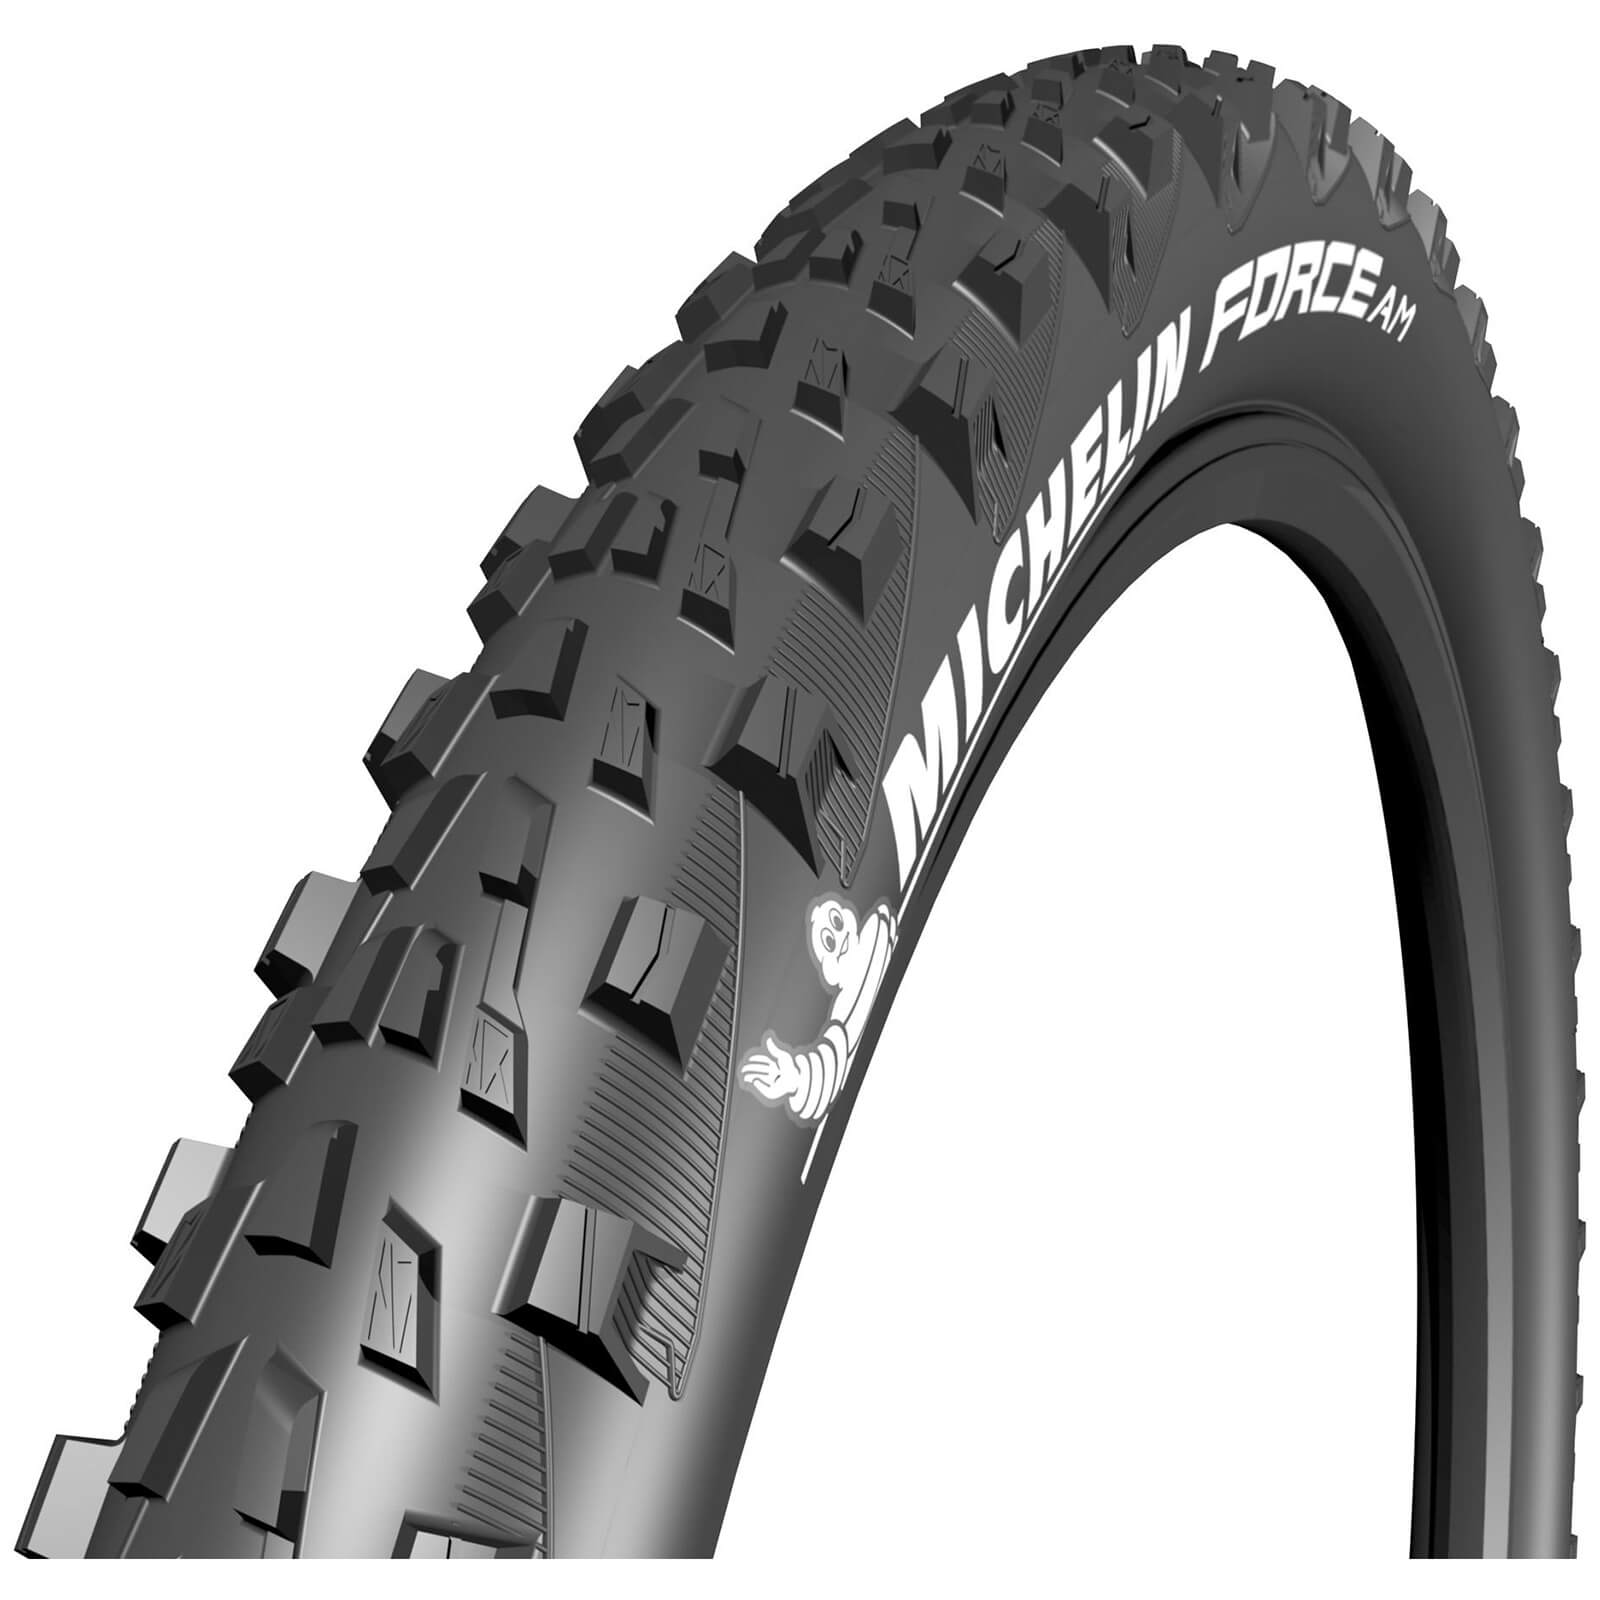 Michelin Force AM Performance Line MTB Tyre - 27.5x2.60